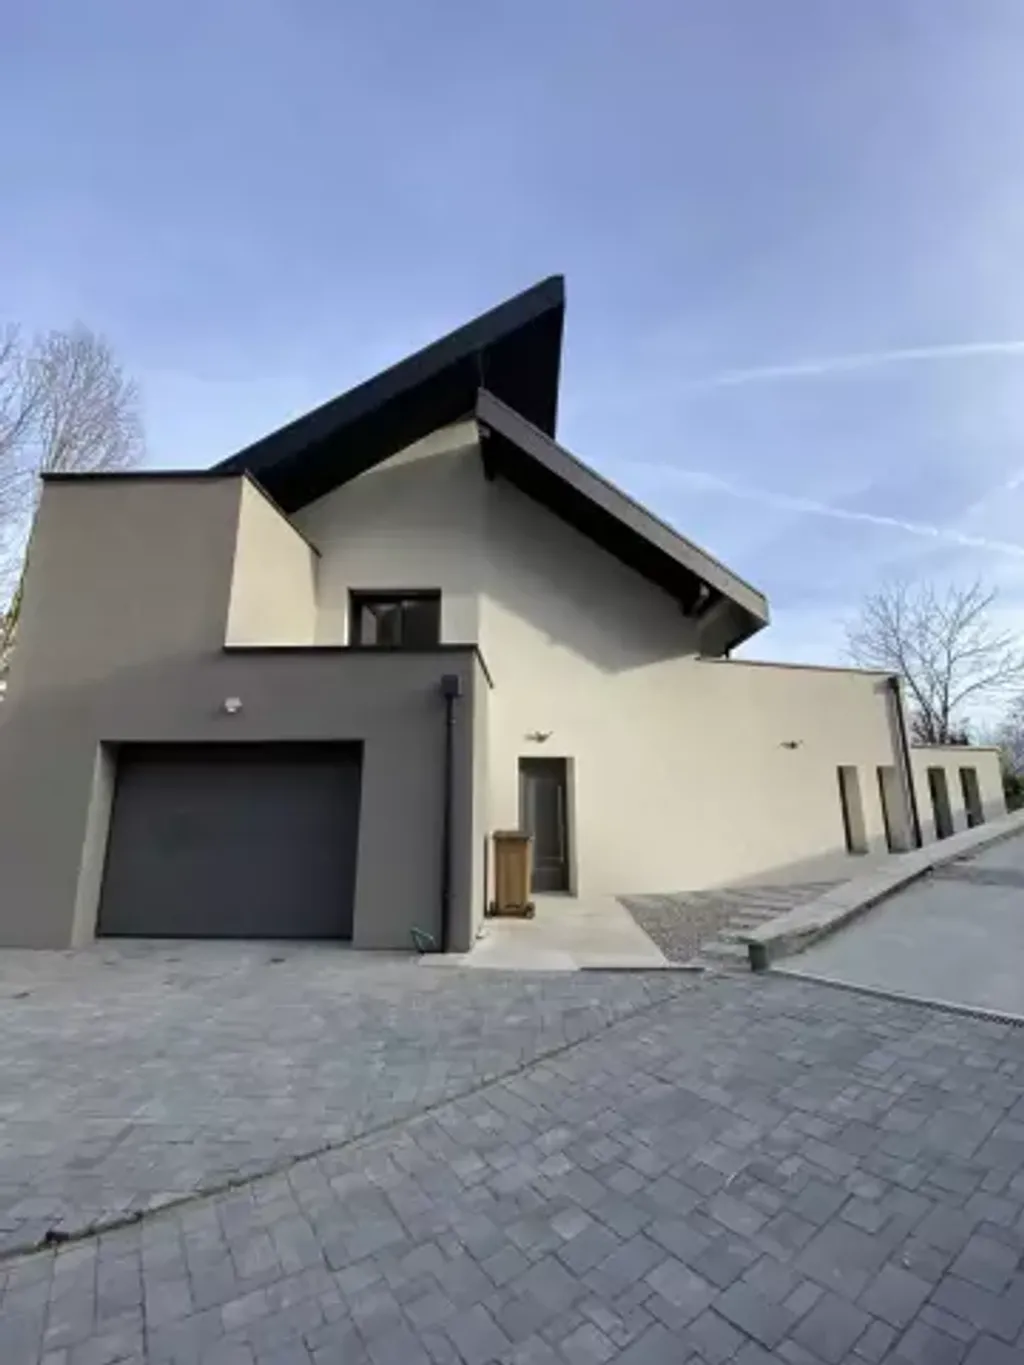 Achat maison à vendre 4 chambres 160 m² - Épagny-Metz-Tessy